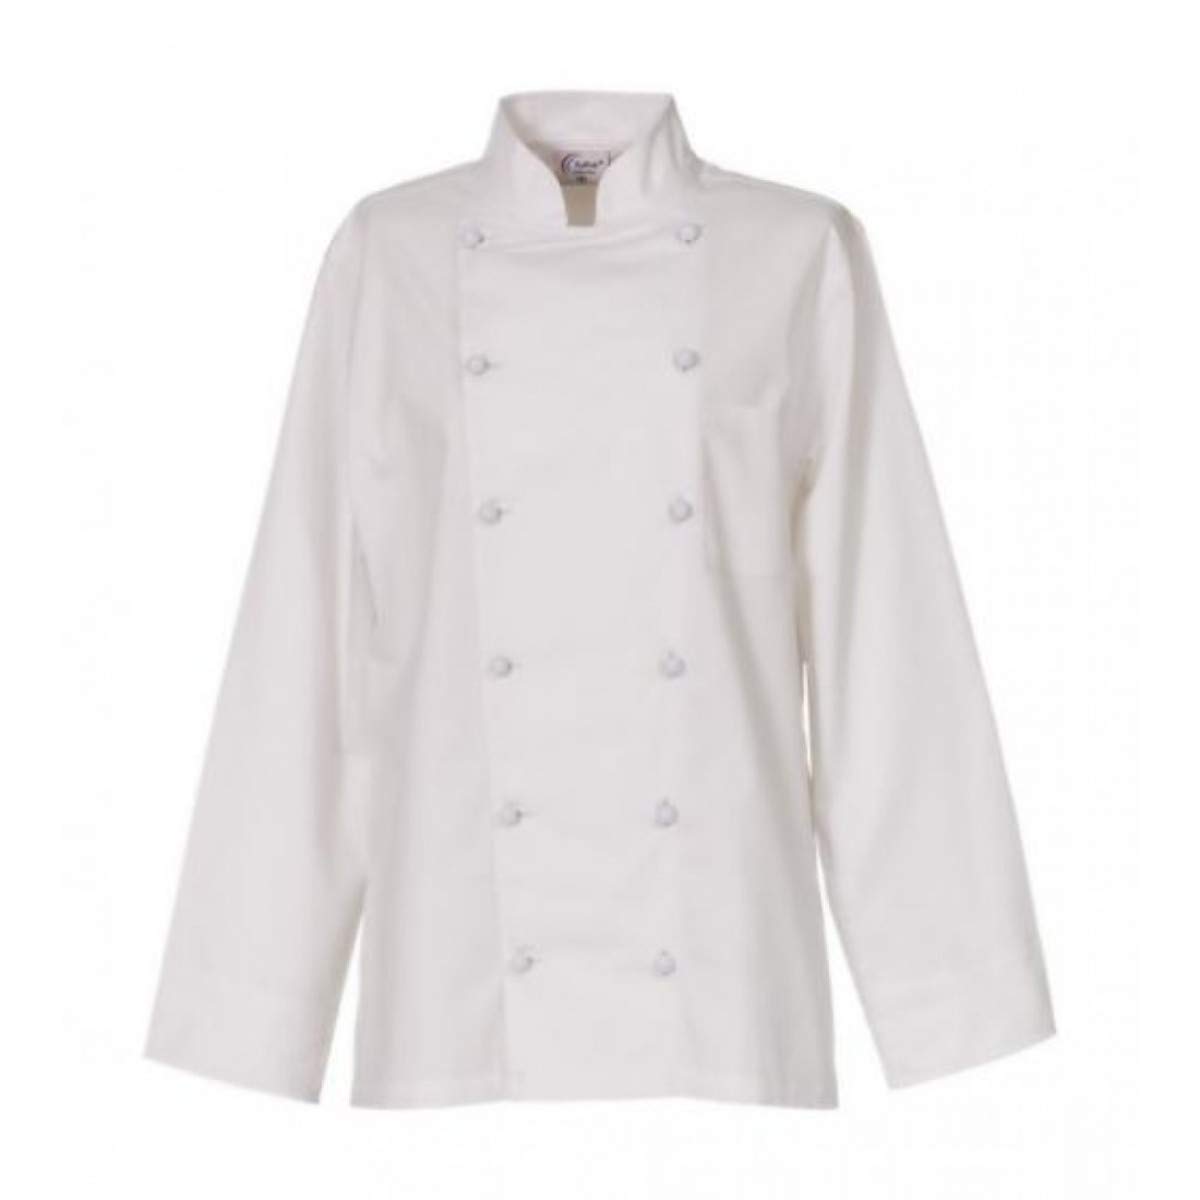 Gastro Uzal Damen-Kochjacke Langarm/Ladies Chef Jacket Long Sleeve,XS-3XL,1Stk., Gastronomie/Catering/Party/Pub/Bar/Kitchen (S)